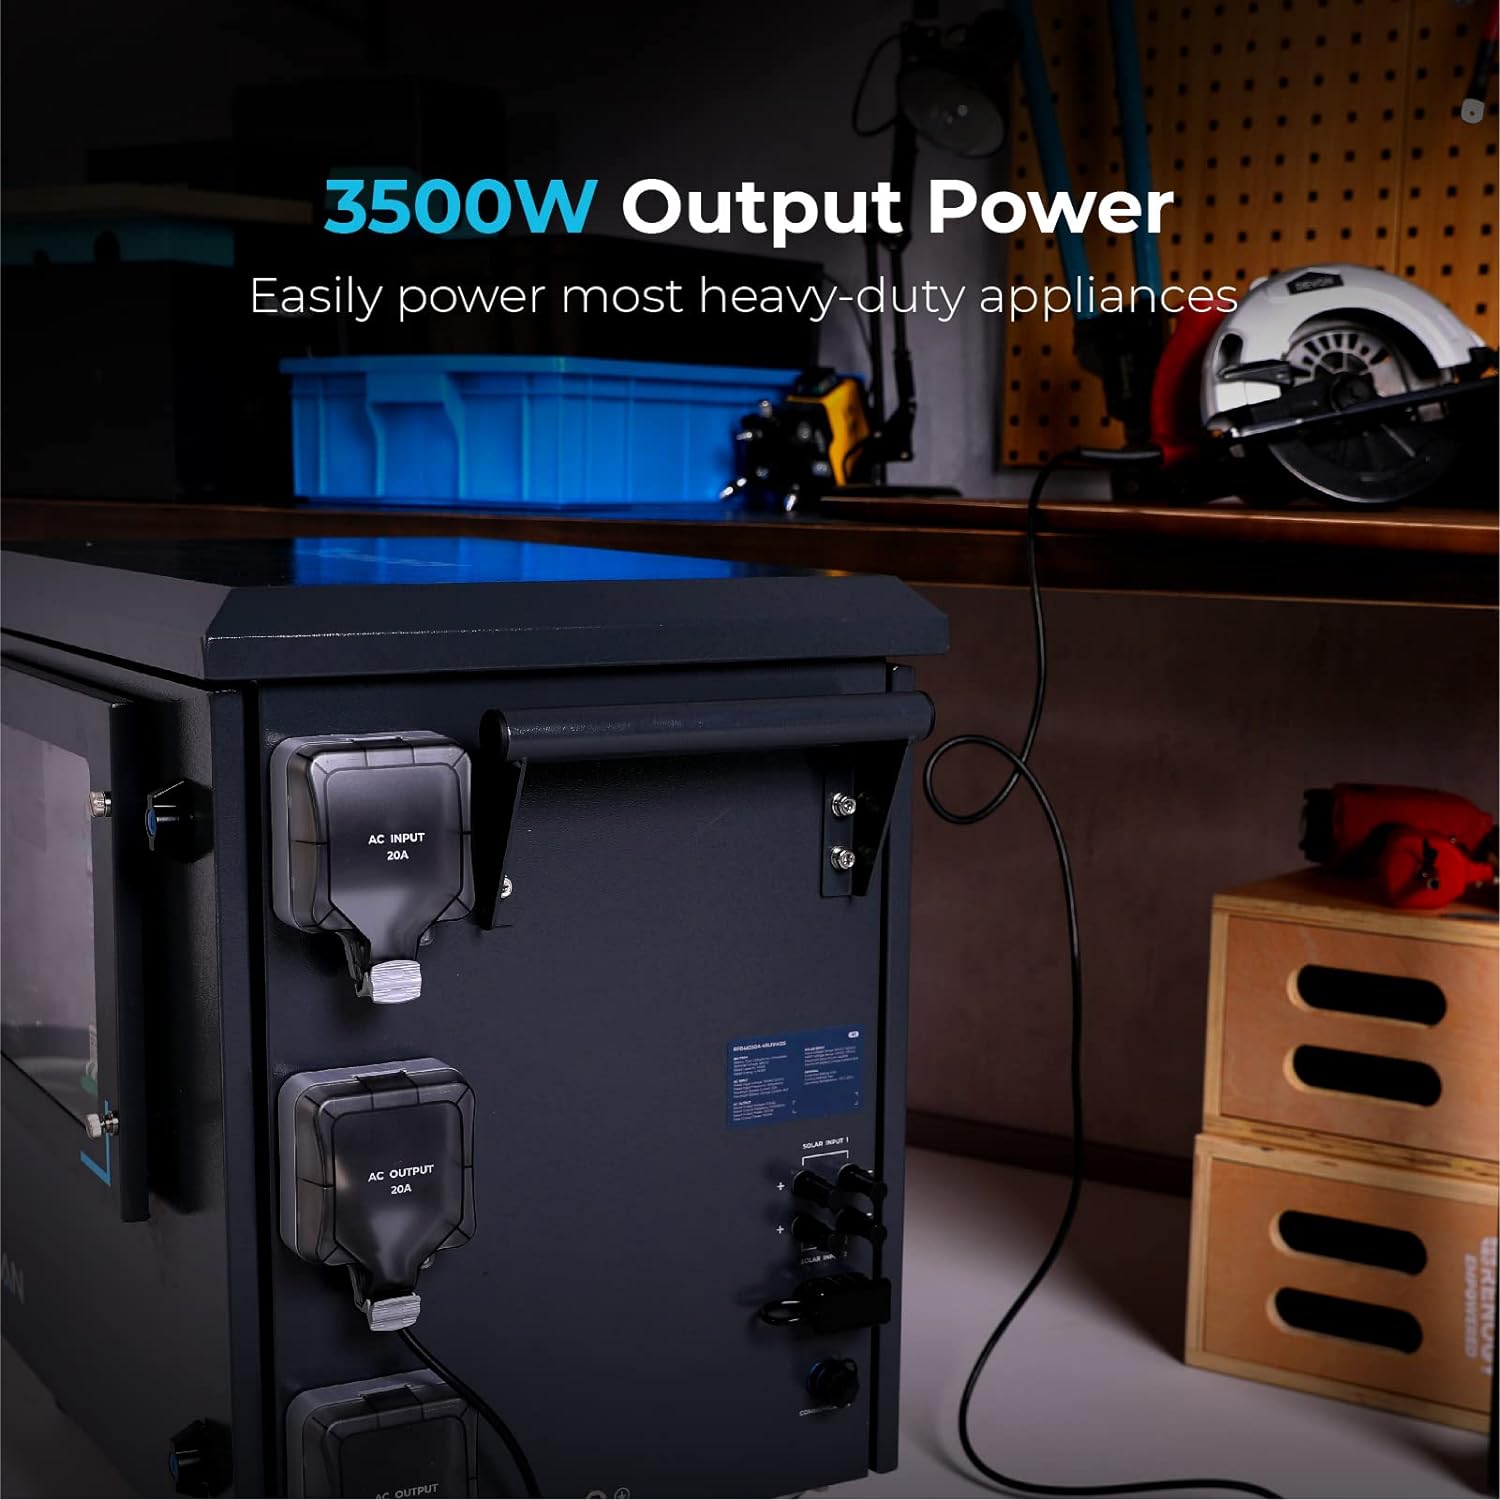 Renogy Lycan 5000 Power Box - Solar Generators and Power Stations Plus